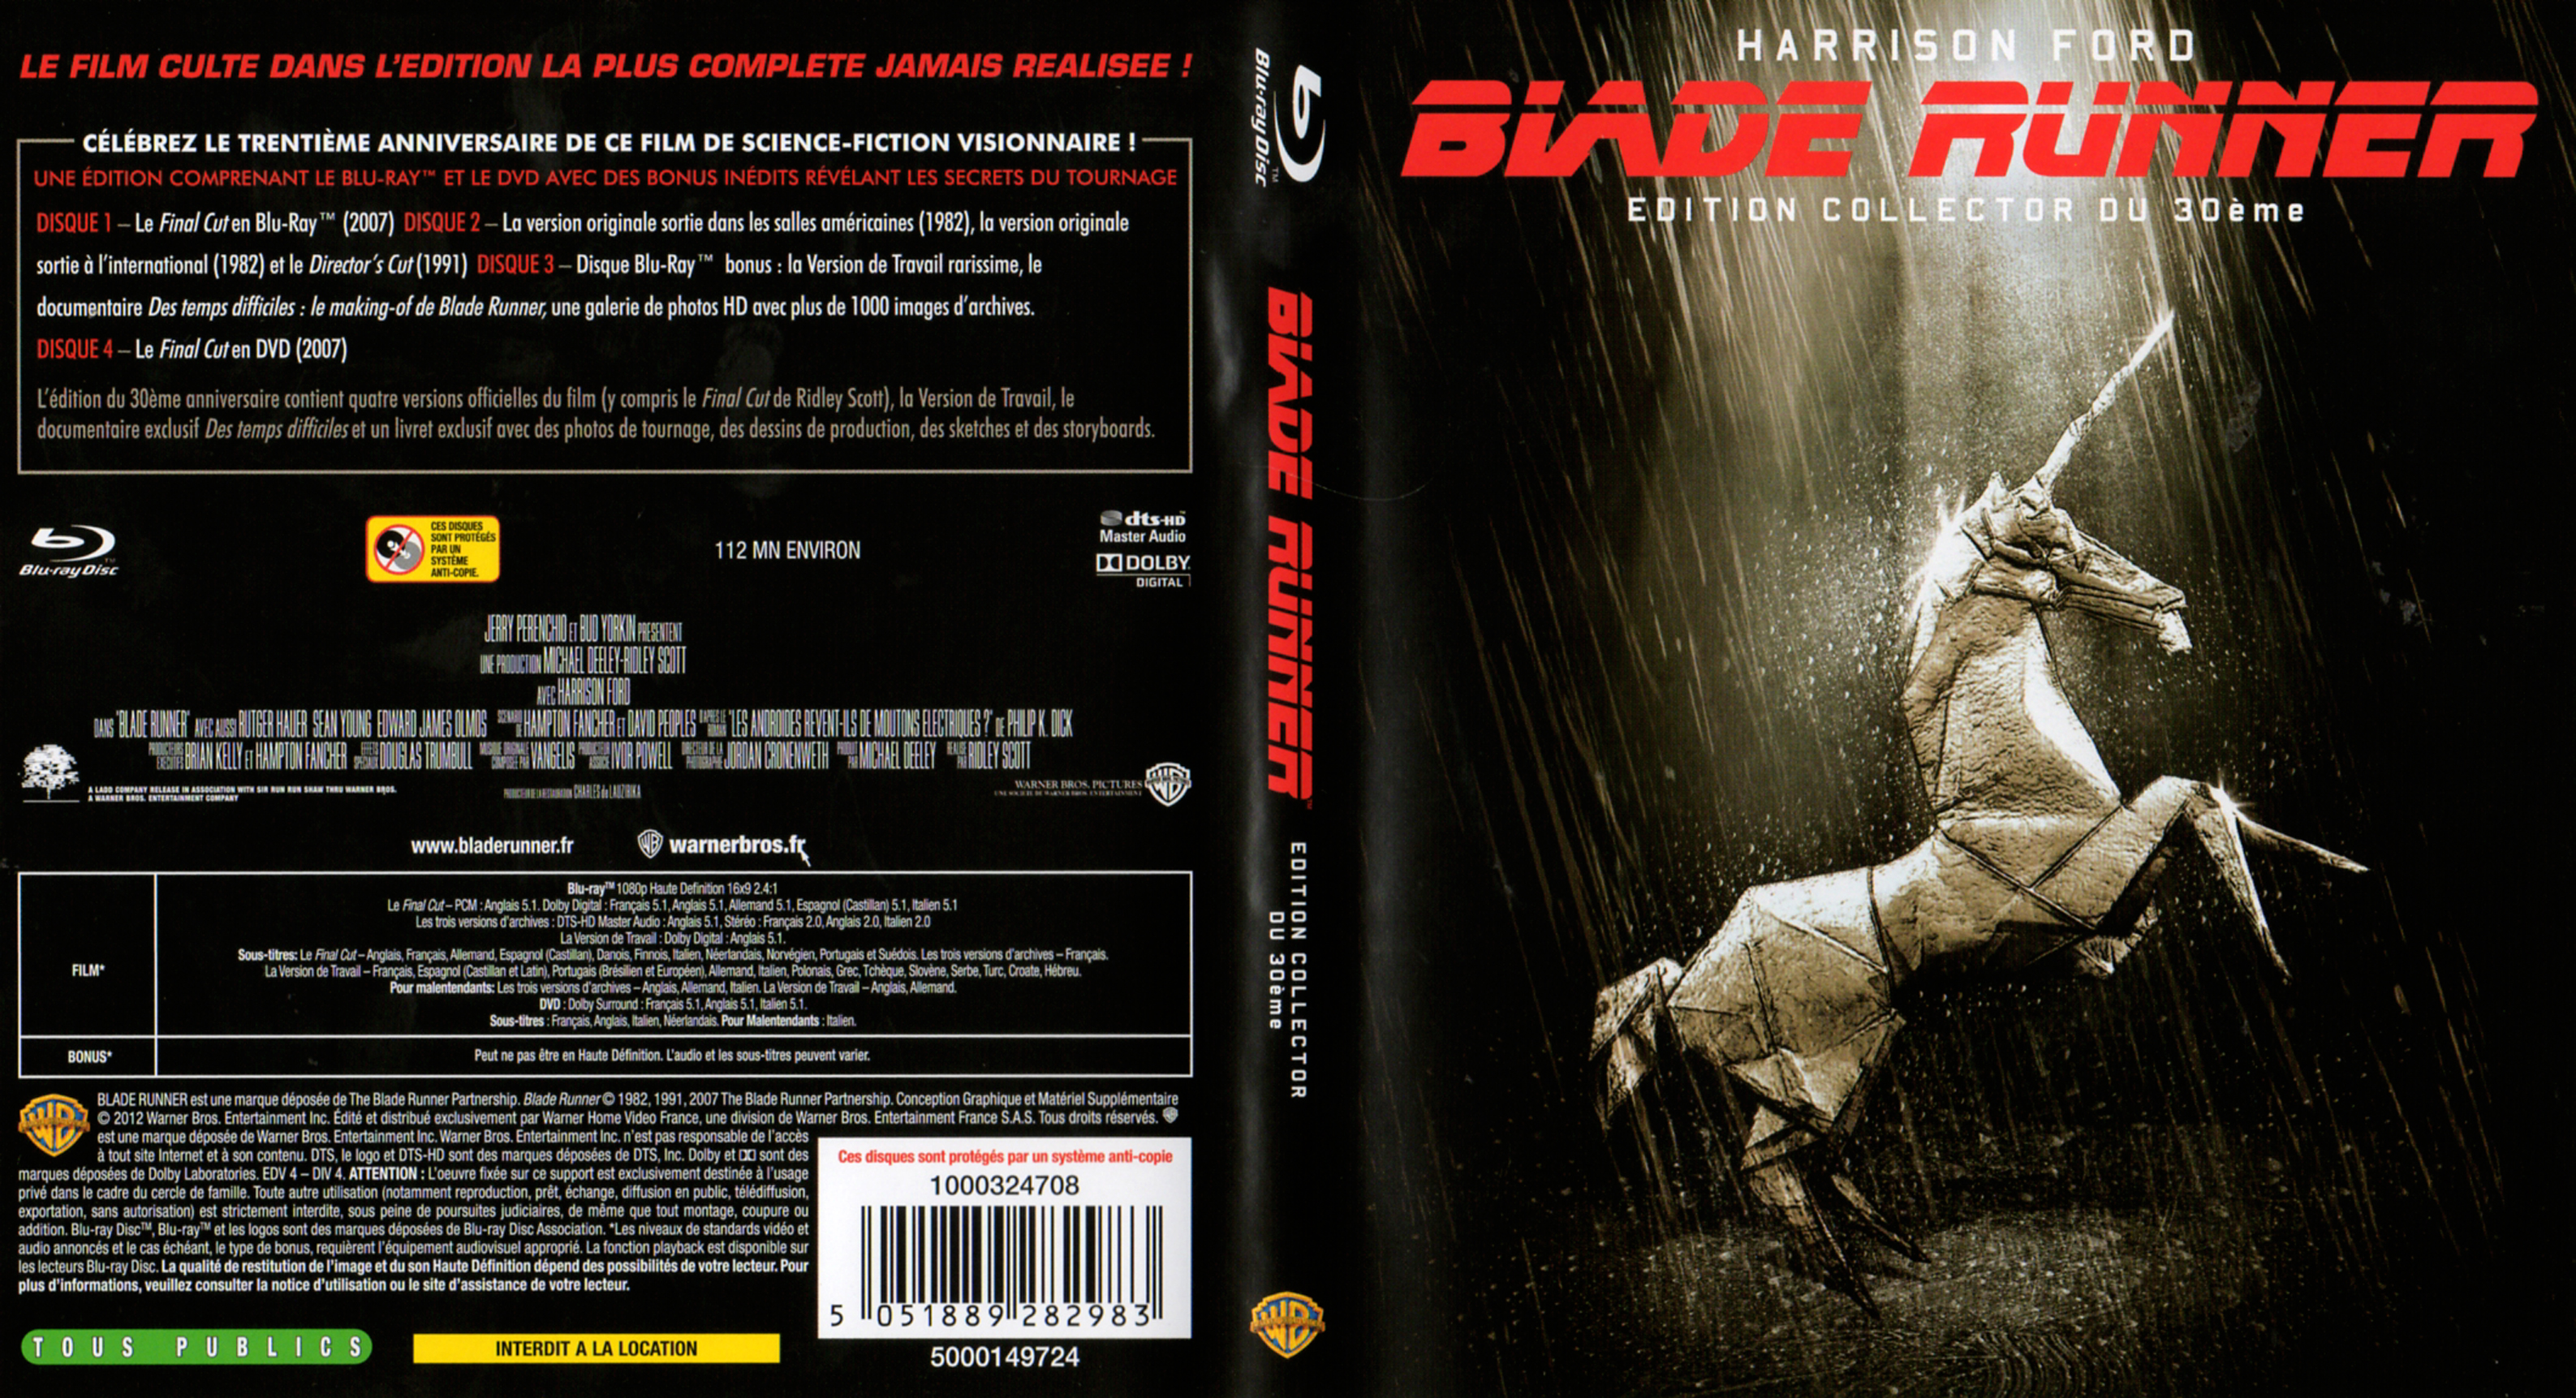 Jaquette DVD Blade runner (BLU-RAY) v2